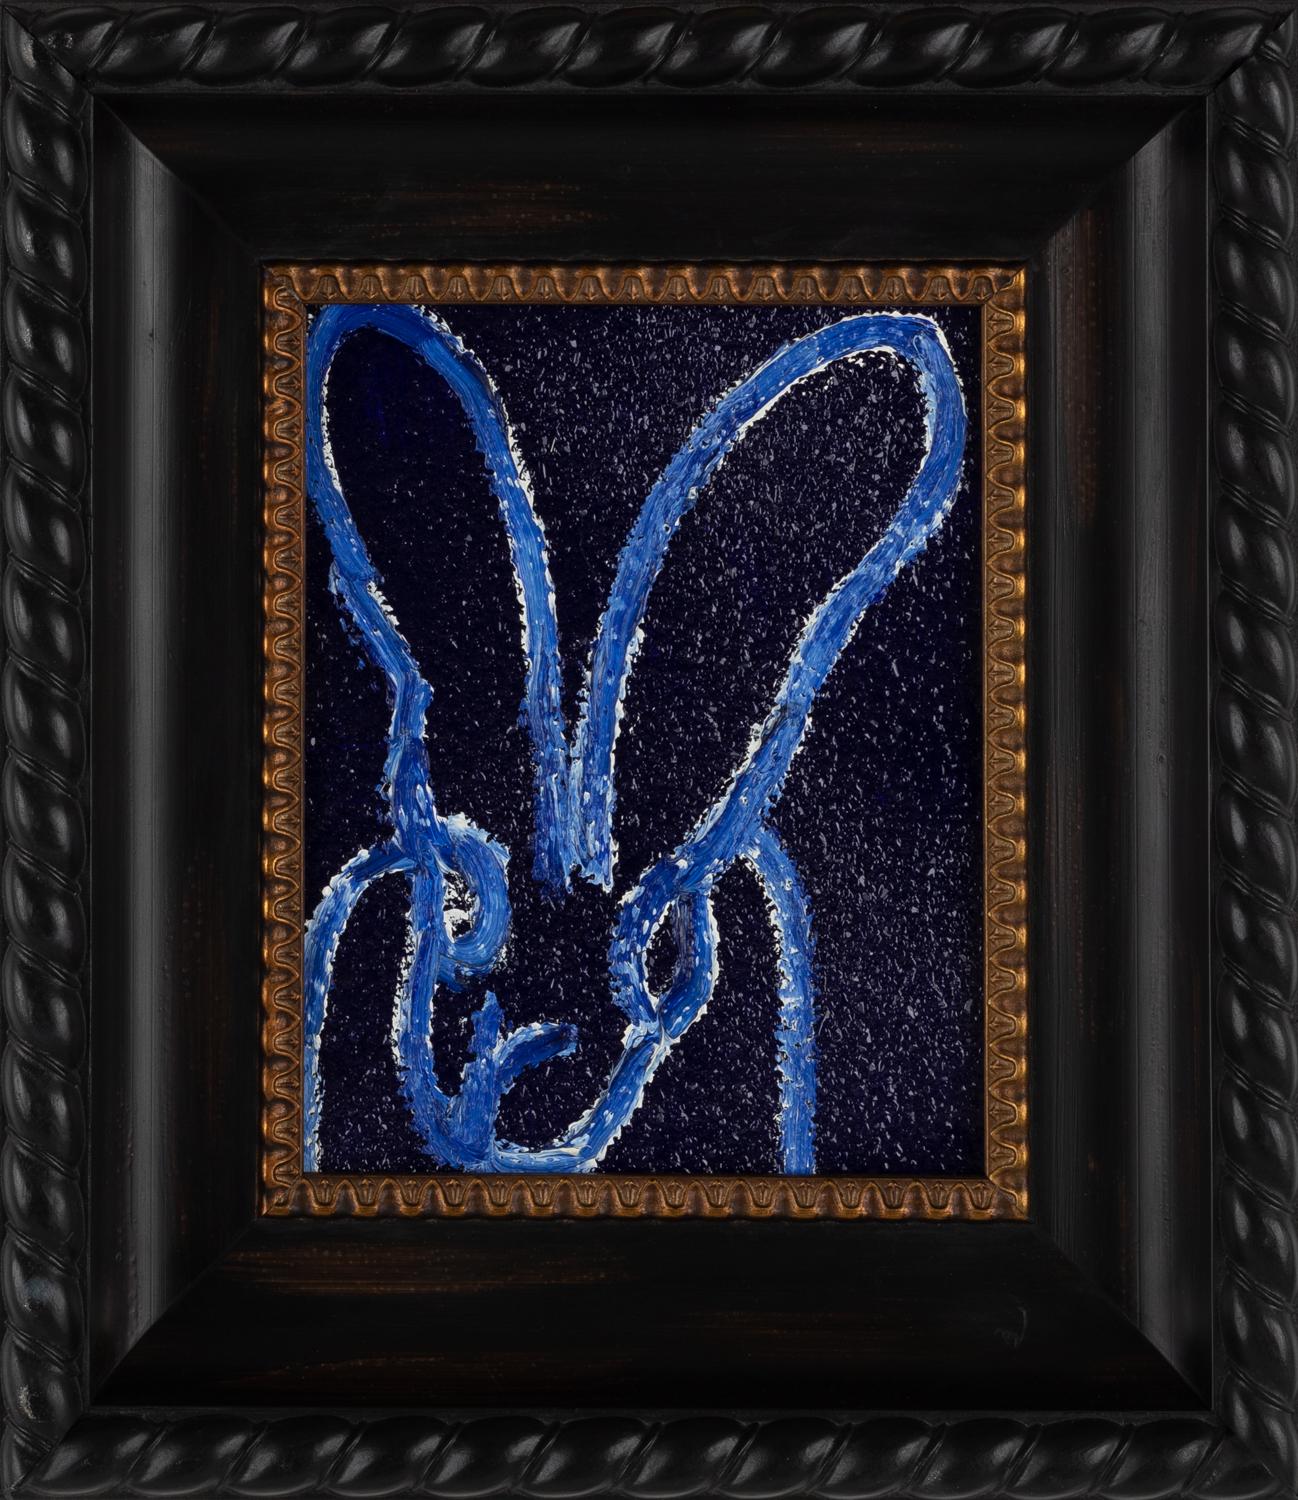 Hunt Slonem Figurative Painting - Untitled "Bunny Painting" Blue Original Oil Painting in Black Vintage Frame